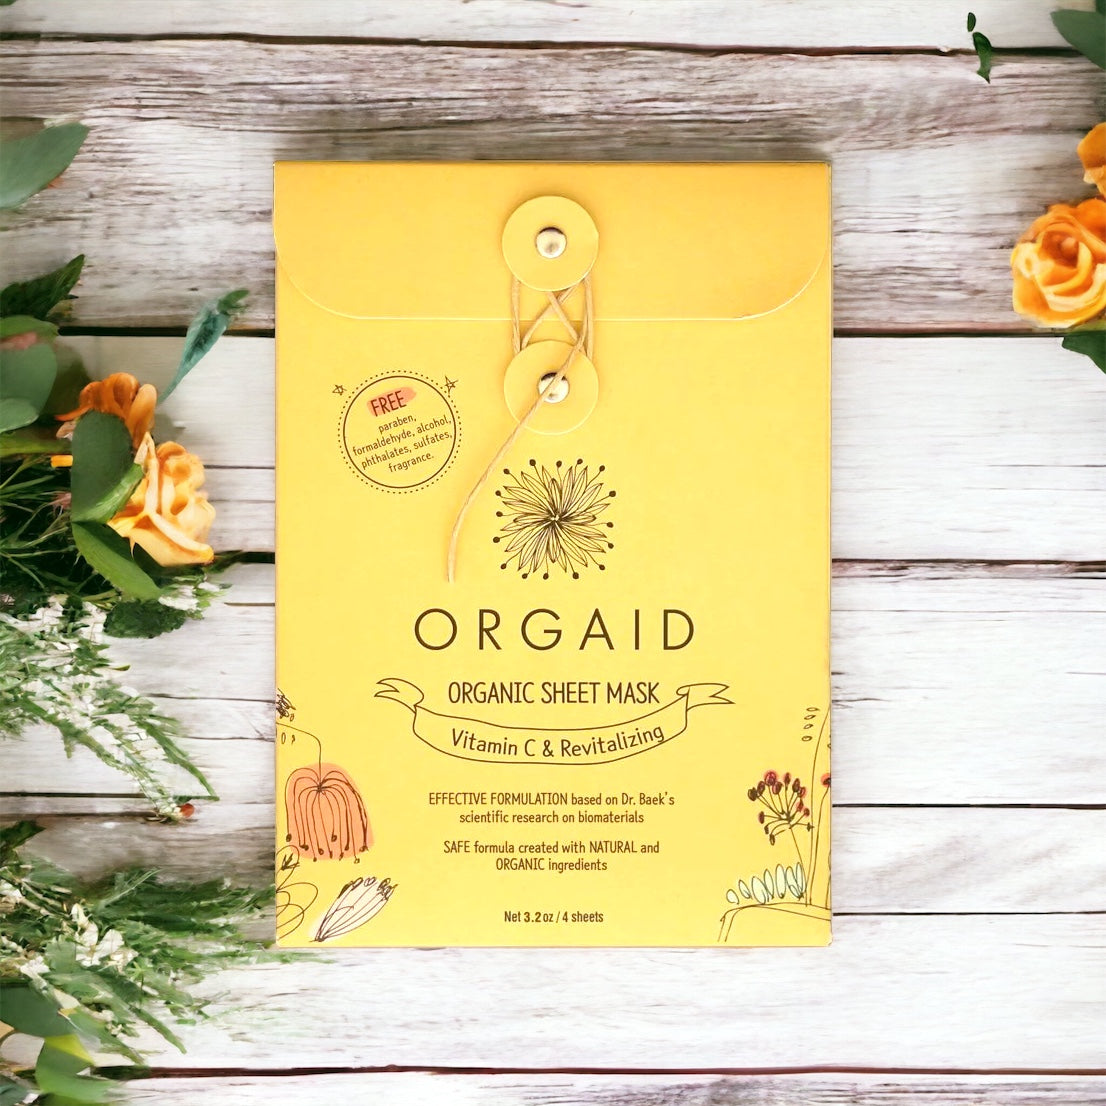 Organic Sheet Mask - Orgaid - Vitamin C & Revitalizing  - 4 Pack